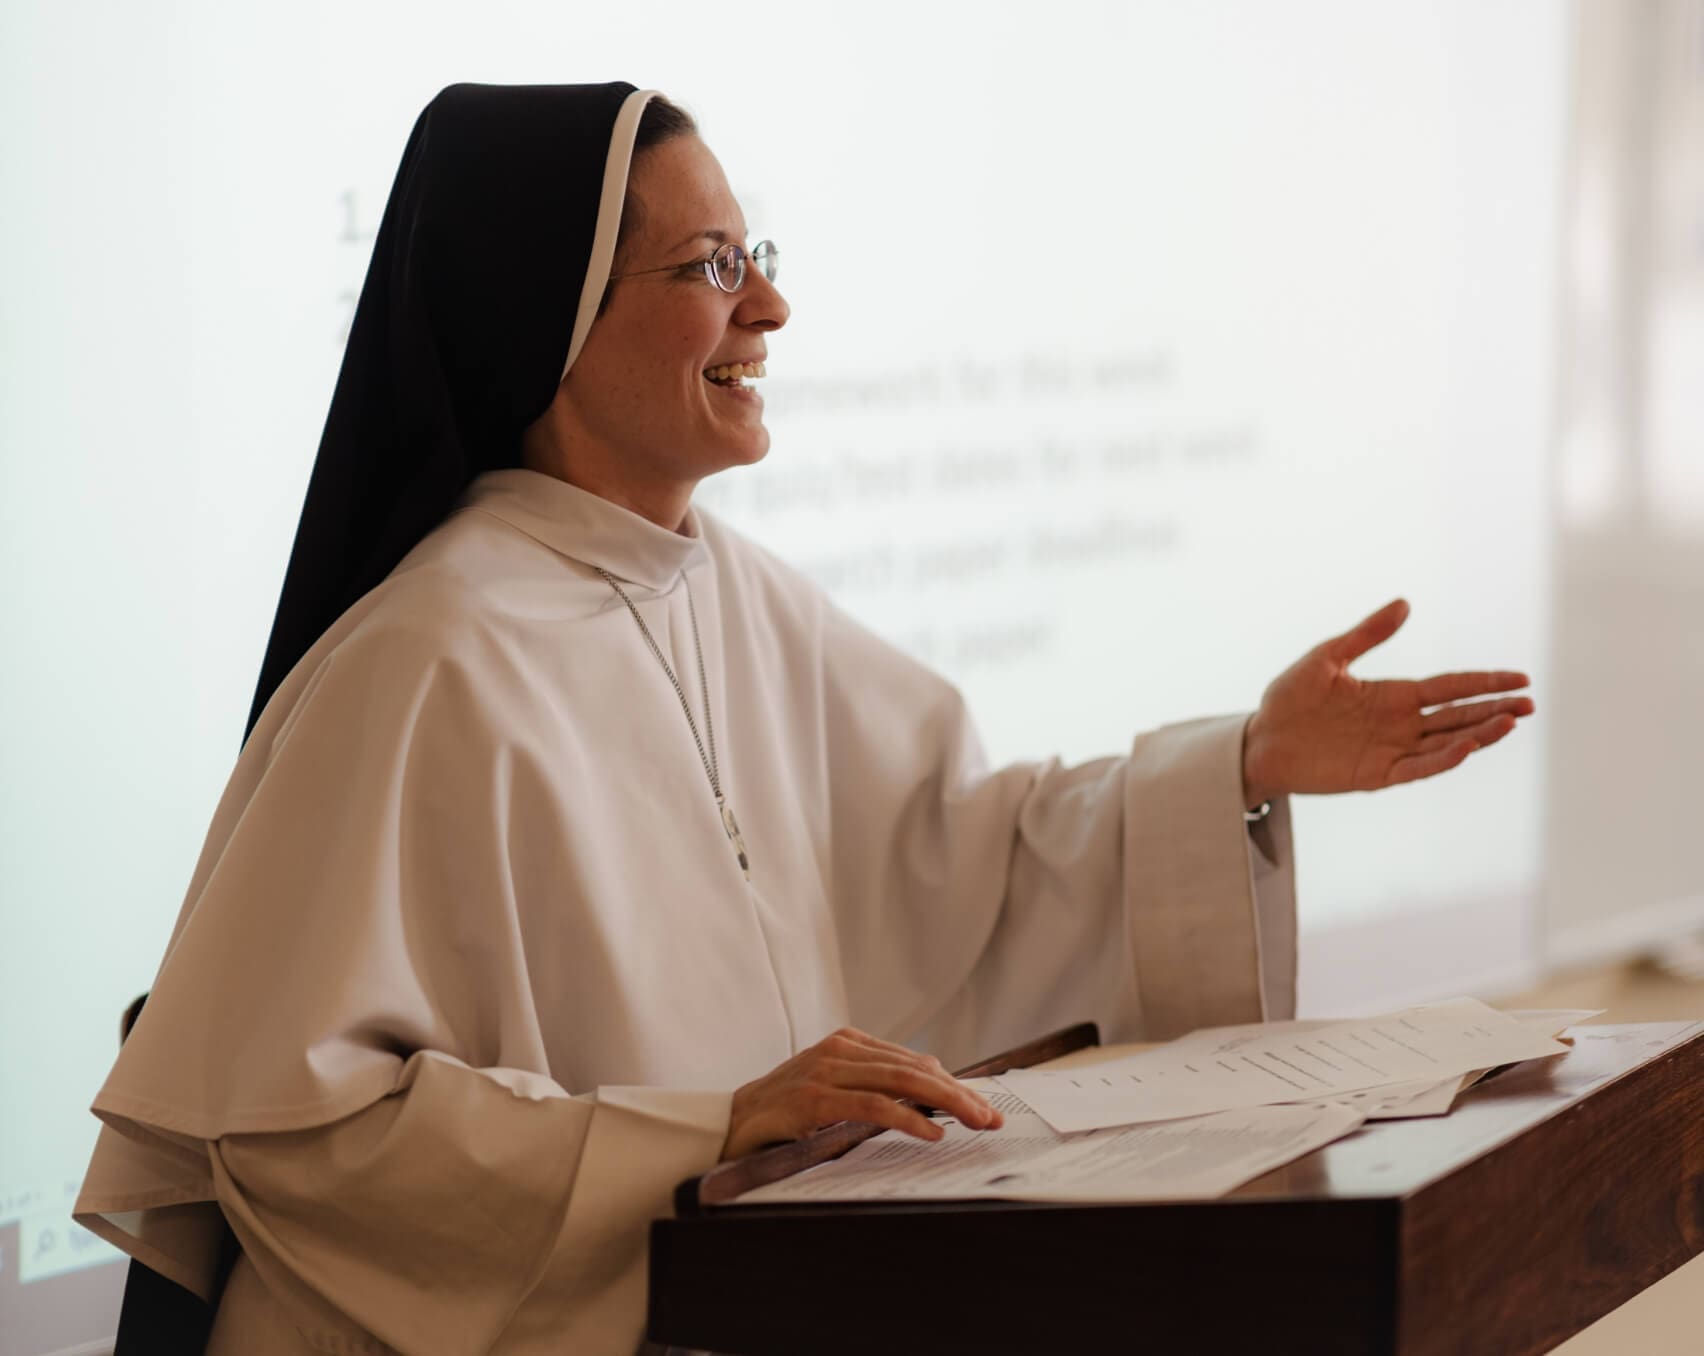 dominican sisters catholic religious vocations women prayer faith Catechesis Evangelization Teacher